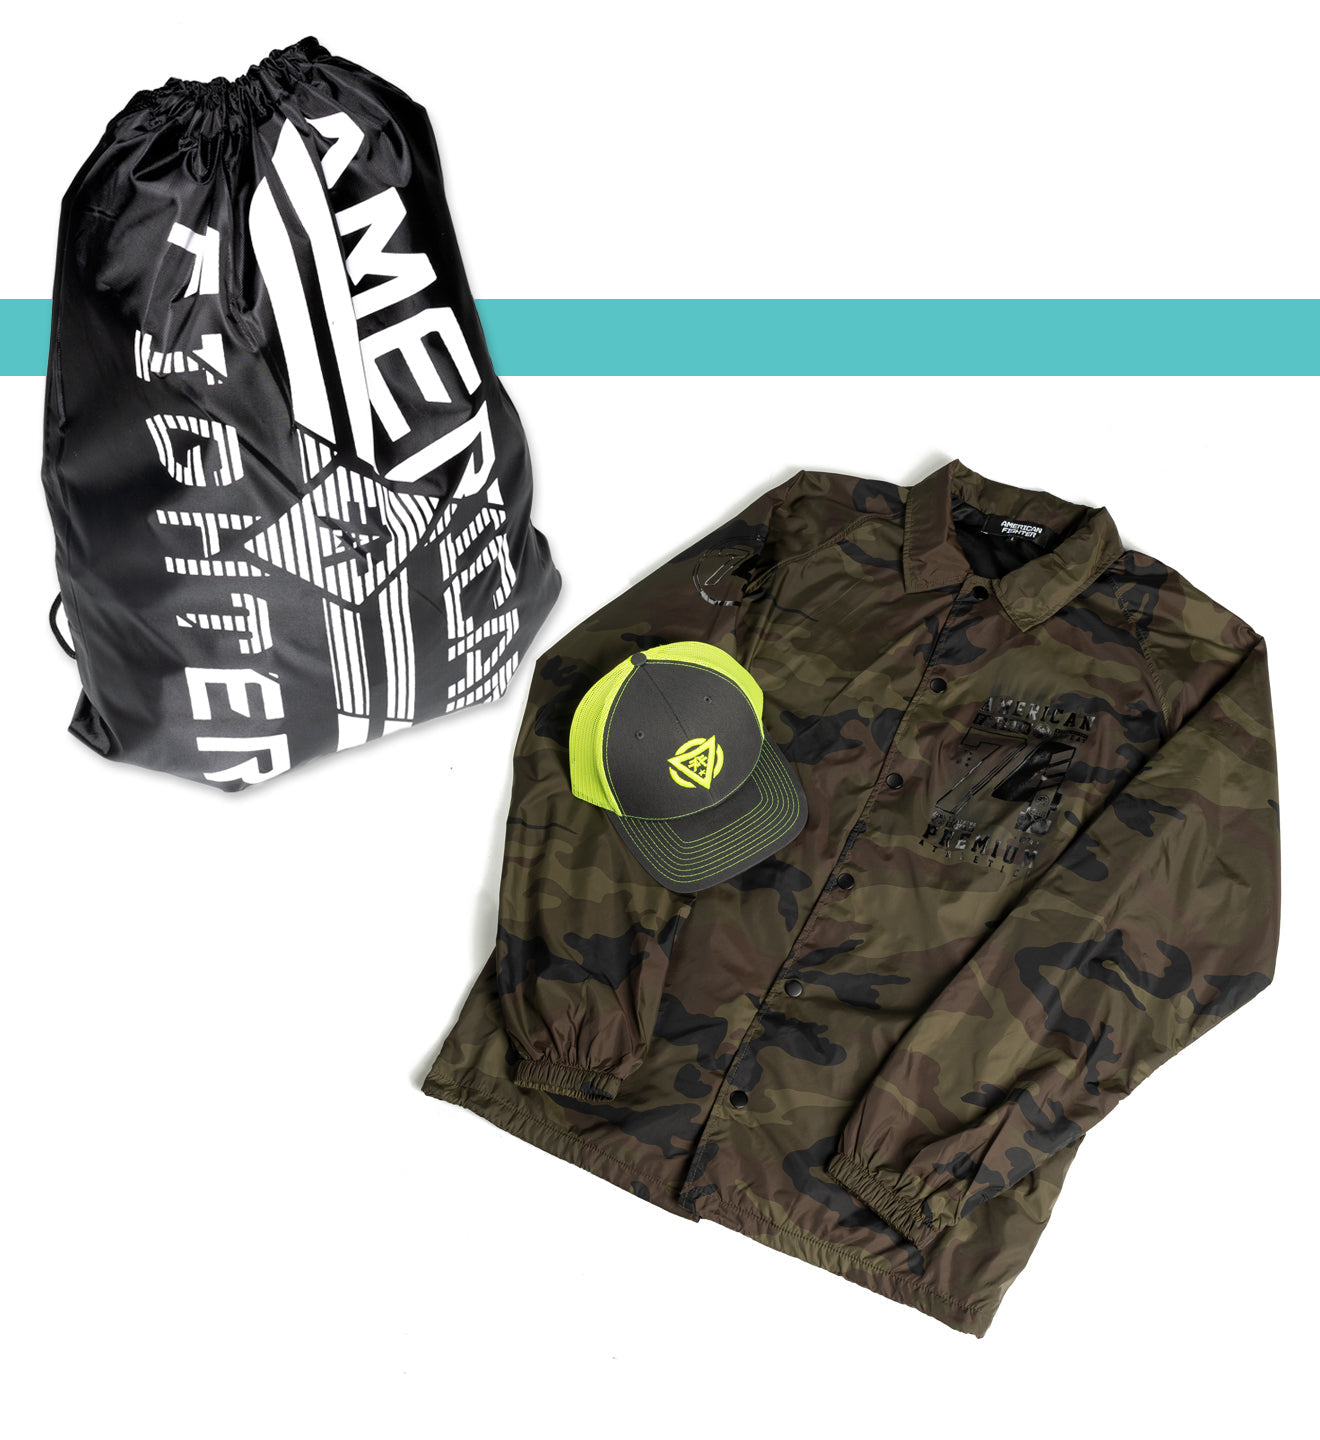 Men's Bundle Pack - 1 Jacket + 1 Hat